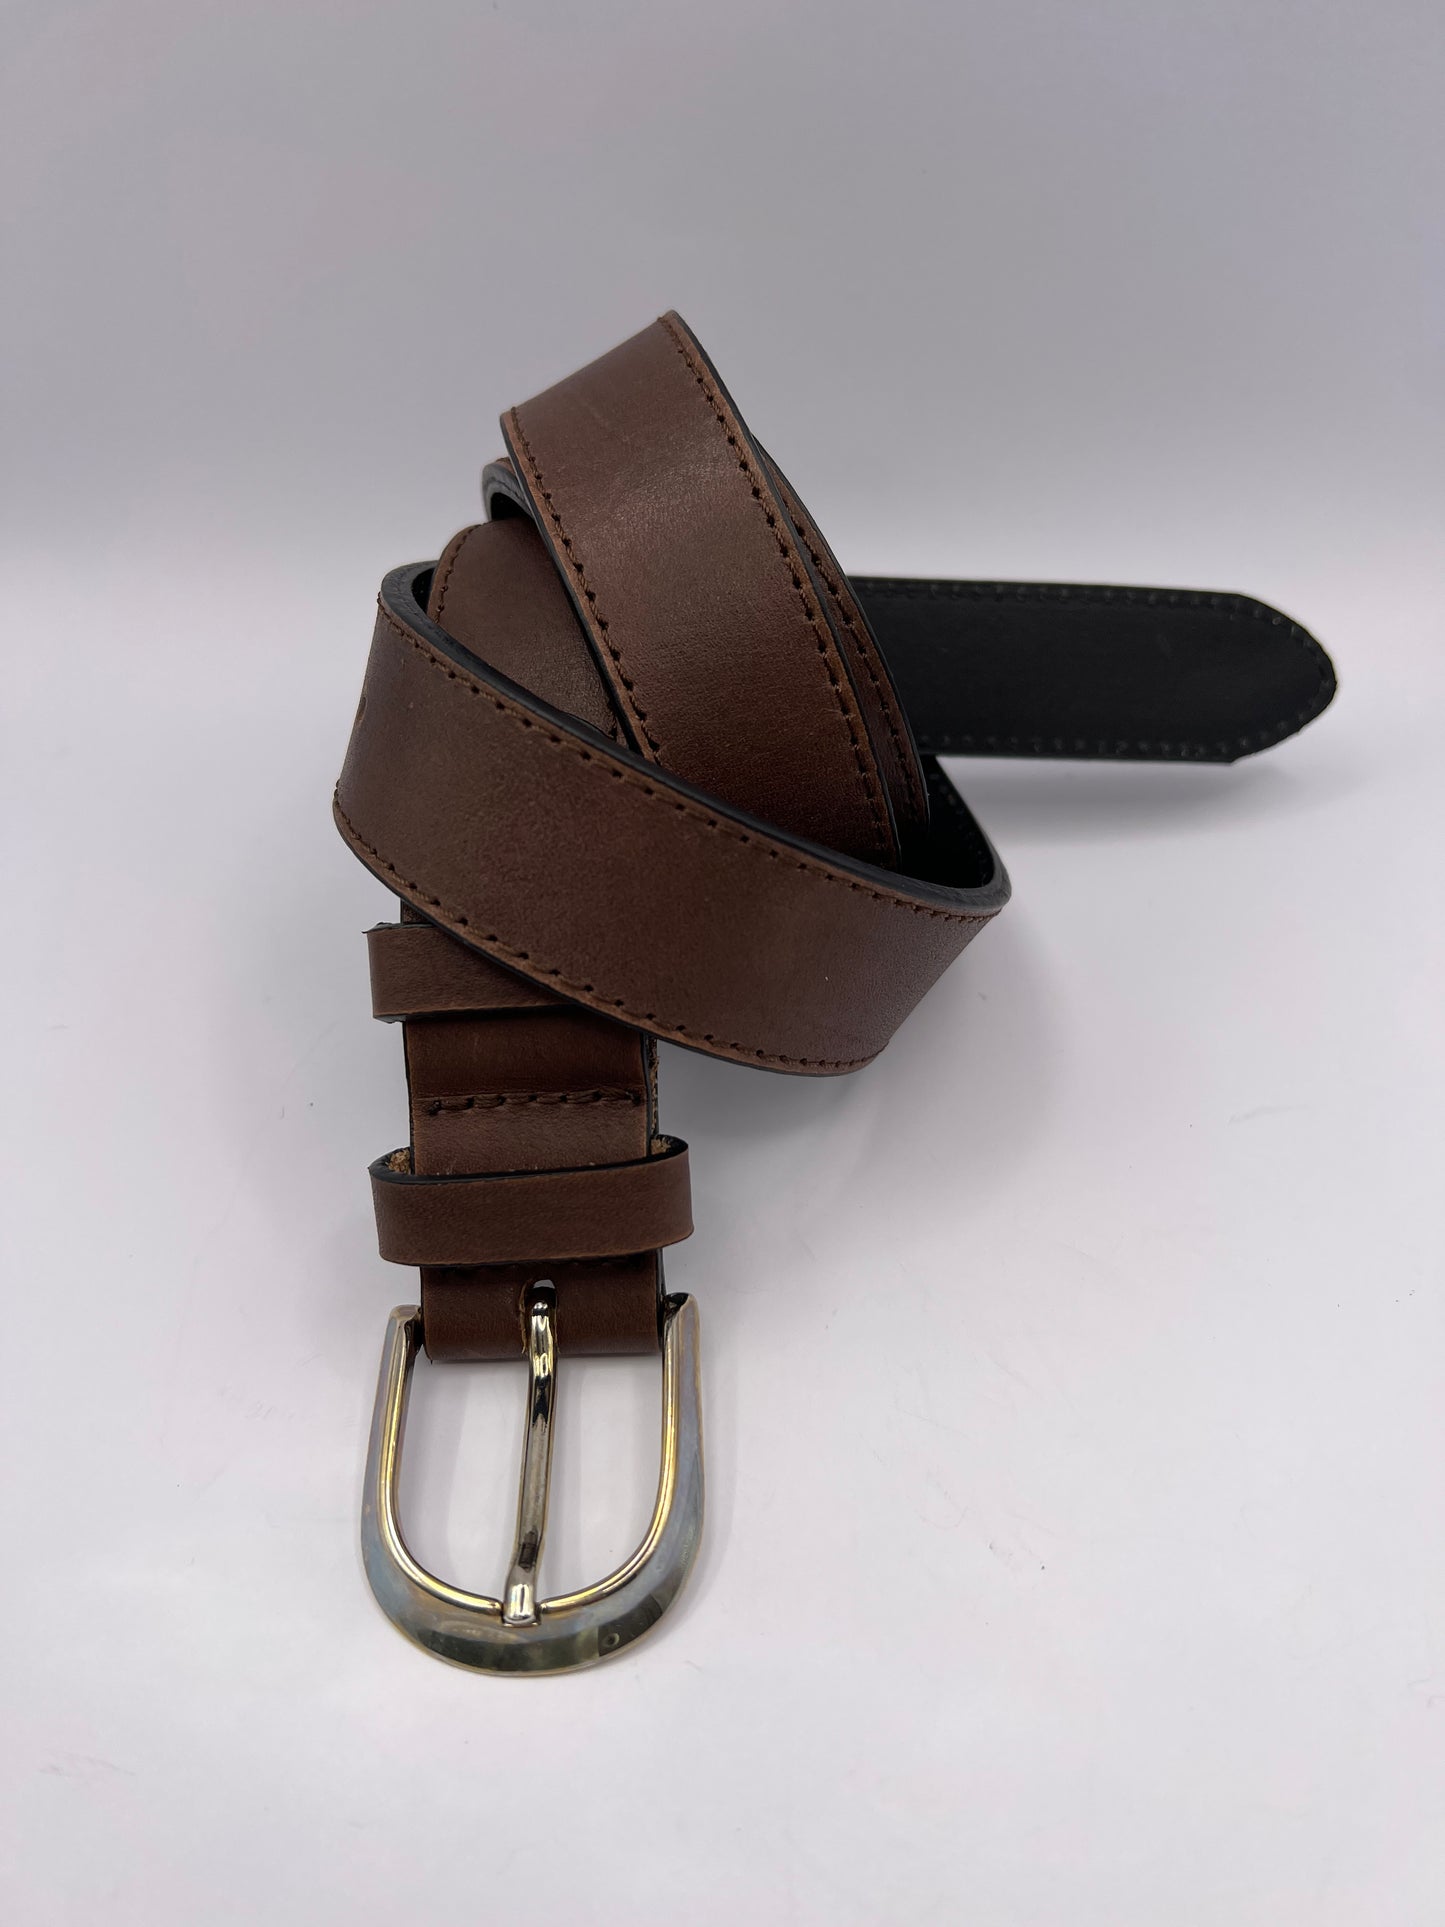 Basic Dark Brown Handmade Leather Belt with Silver Adornment - BLONDISH